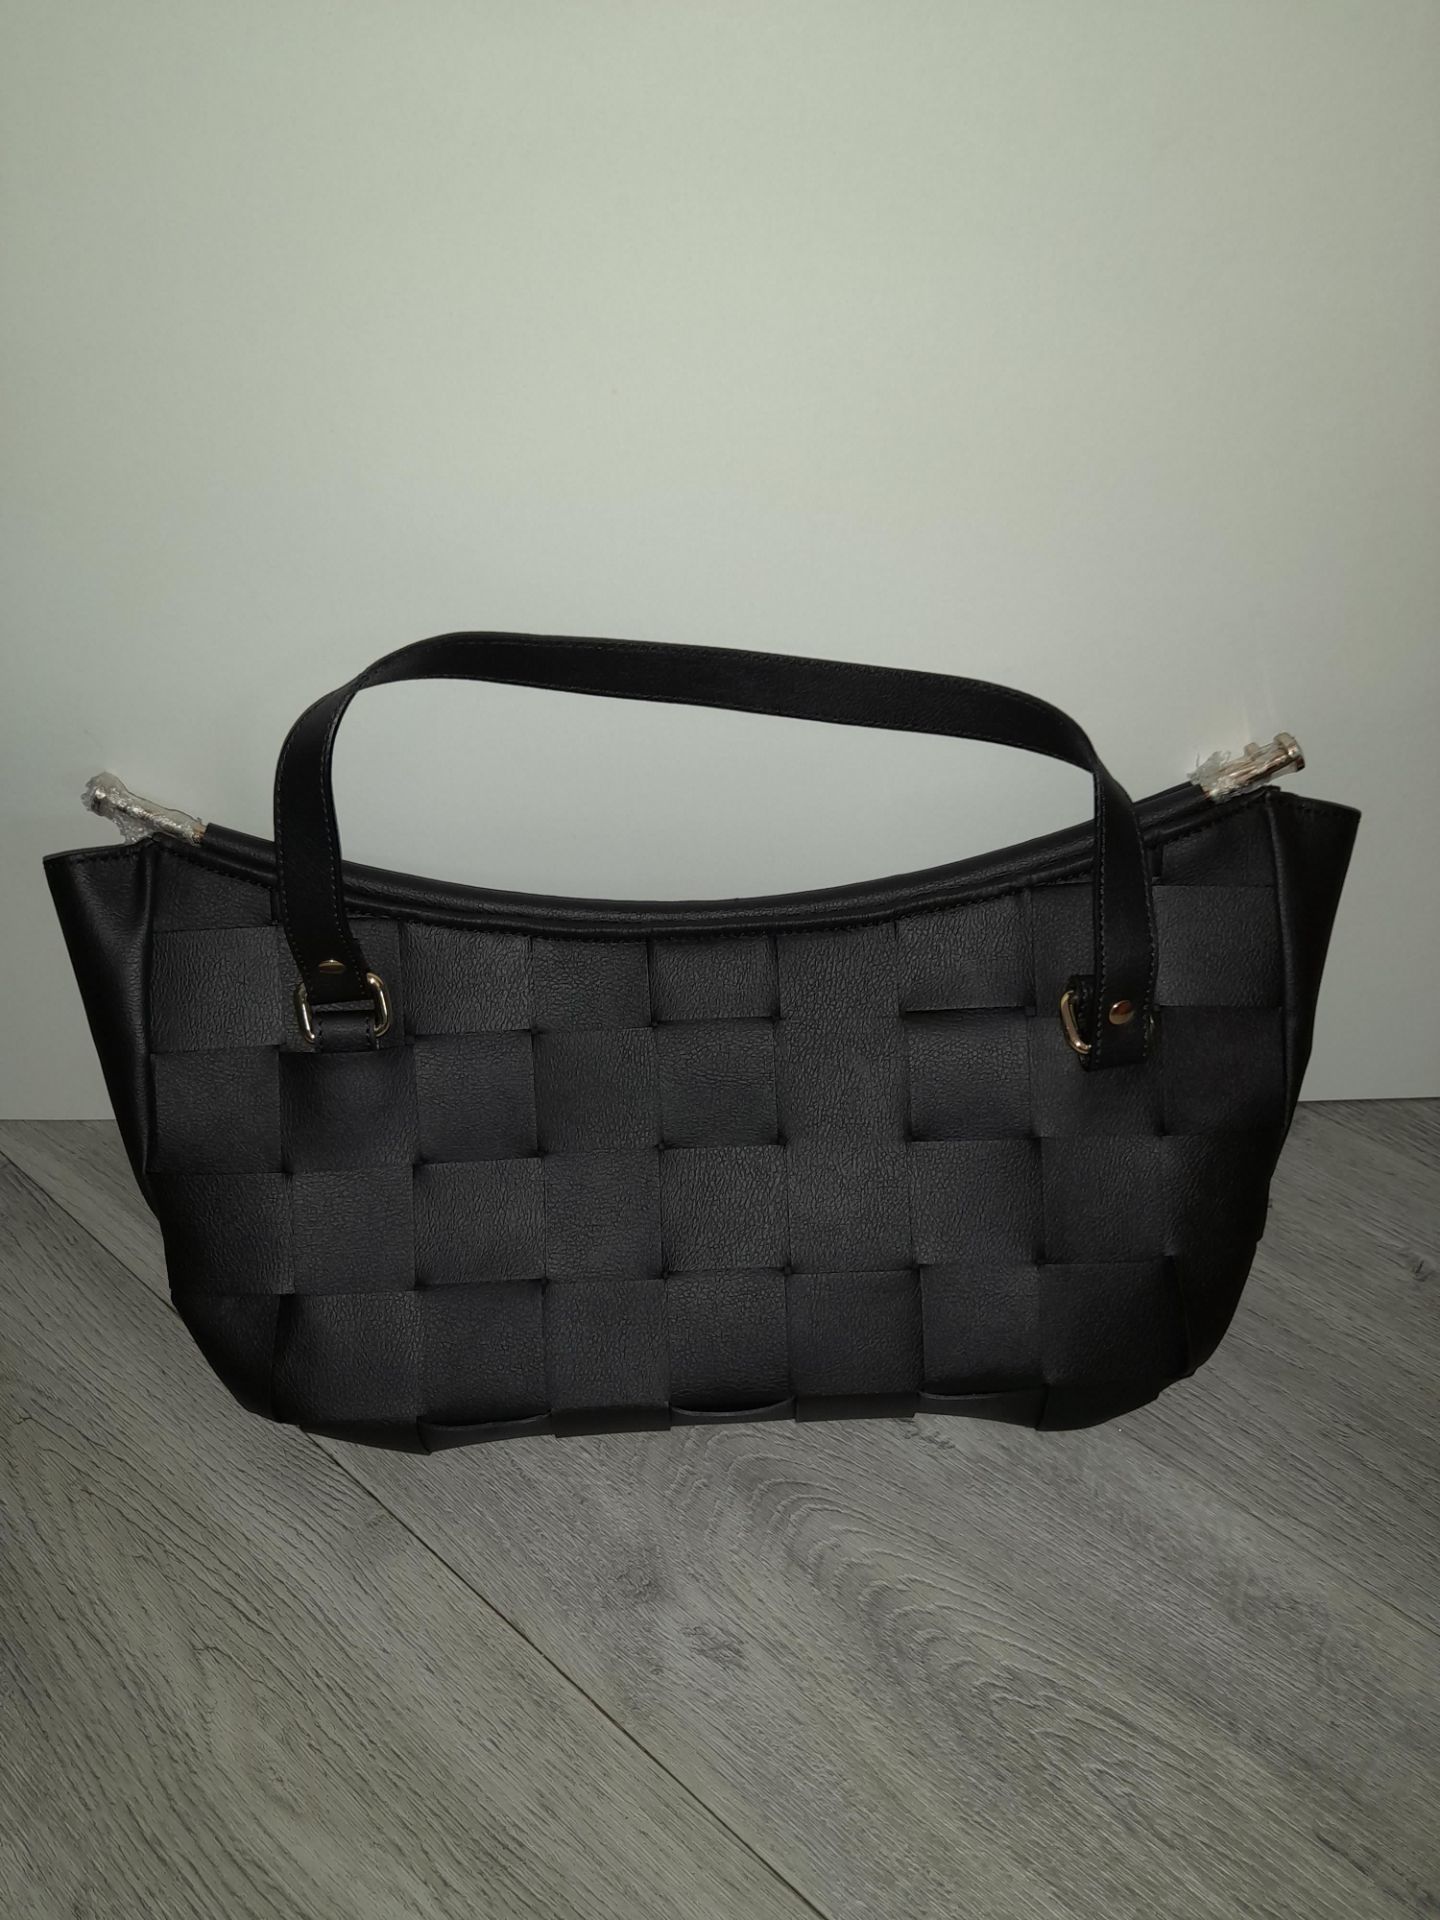 Maviya “The Boat Bag” Vegan Italian Leather Classic Black Bag with Lattice Effect and Gold Rod - Image 2 of 3